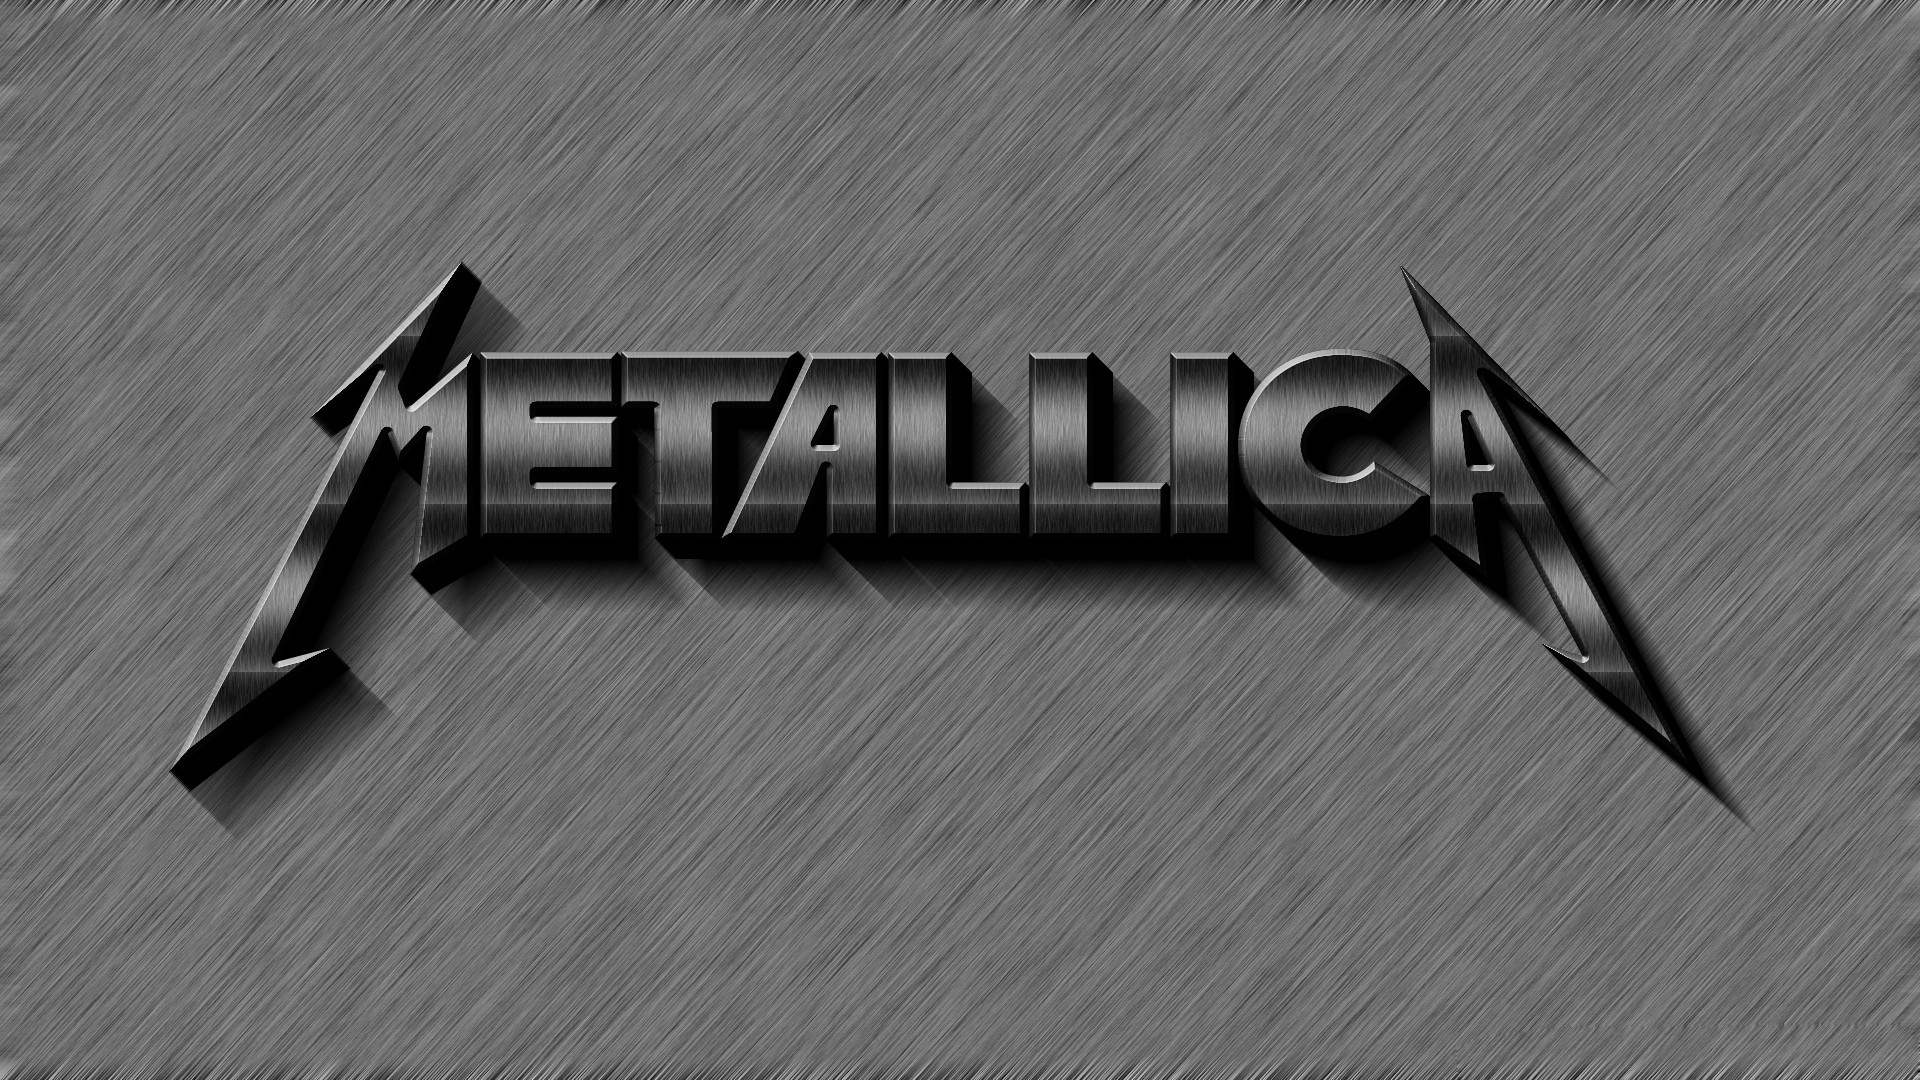 Download wallpapers Metallica logo silver shiny logo Metallica metal  emblem gray carbon fiber texture Metallica brands creative art Metallica  emblem for desktop free Pictures for desktop free